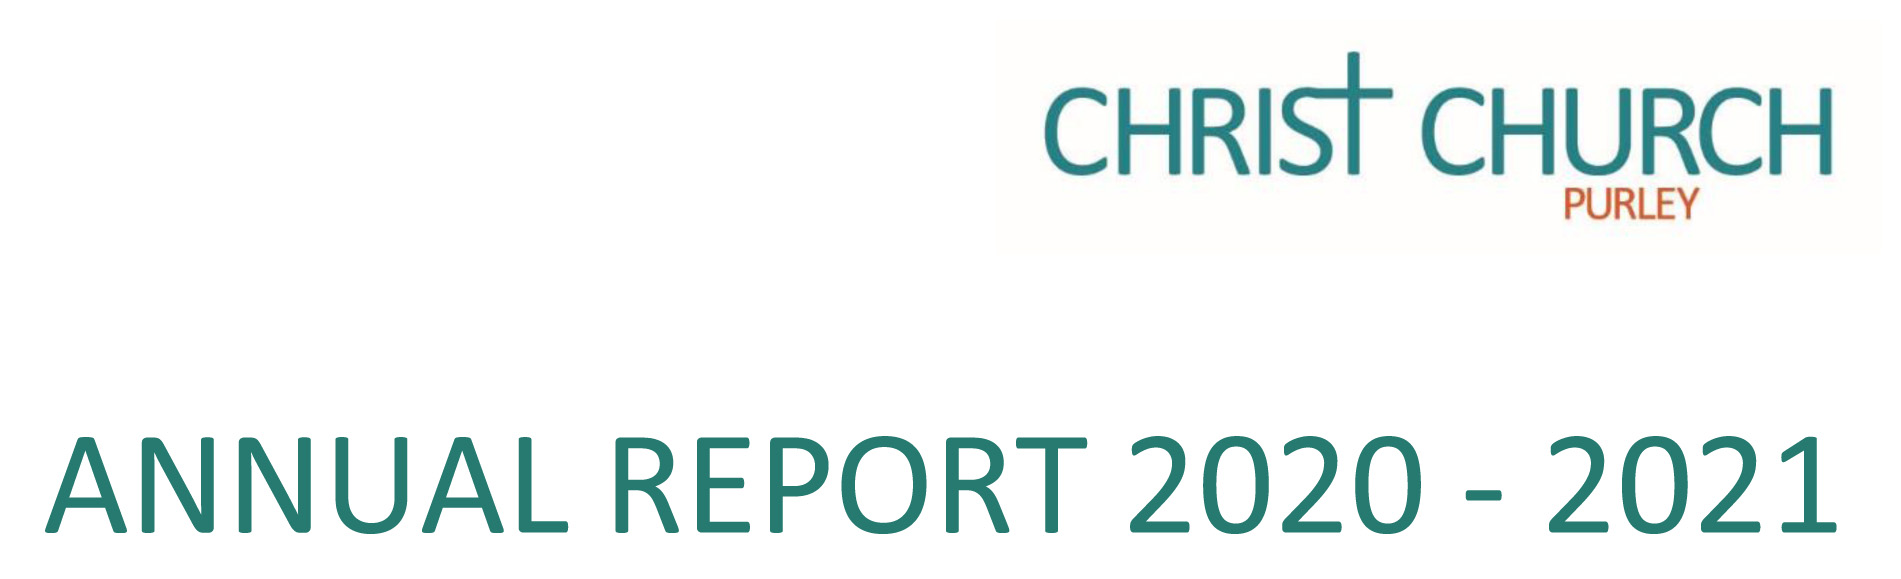 ANNUAL REPORT logo 2020